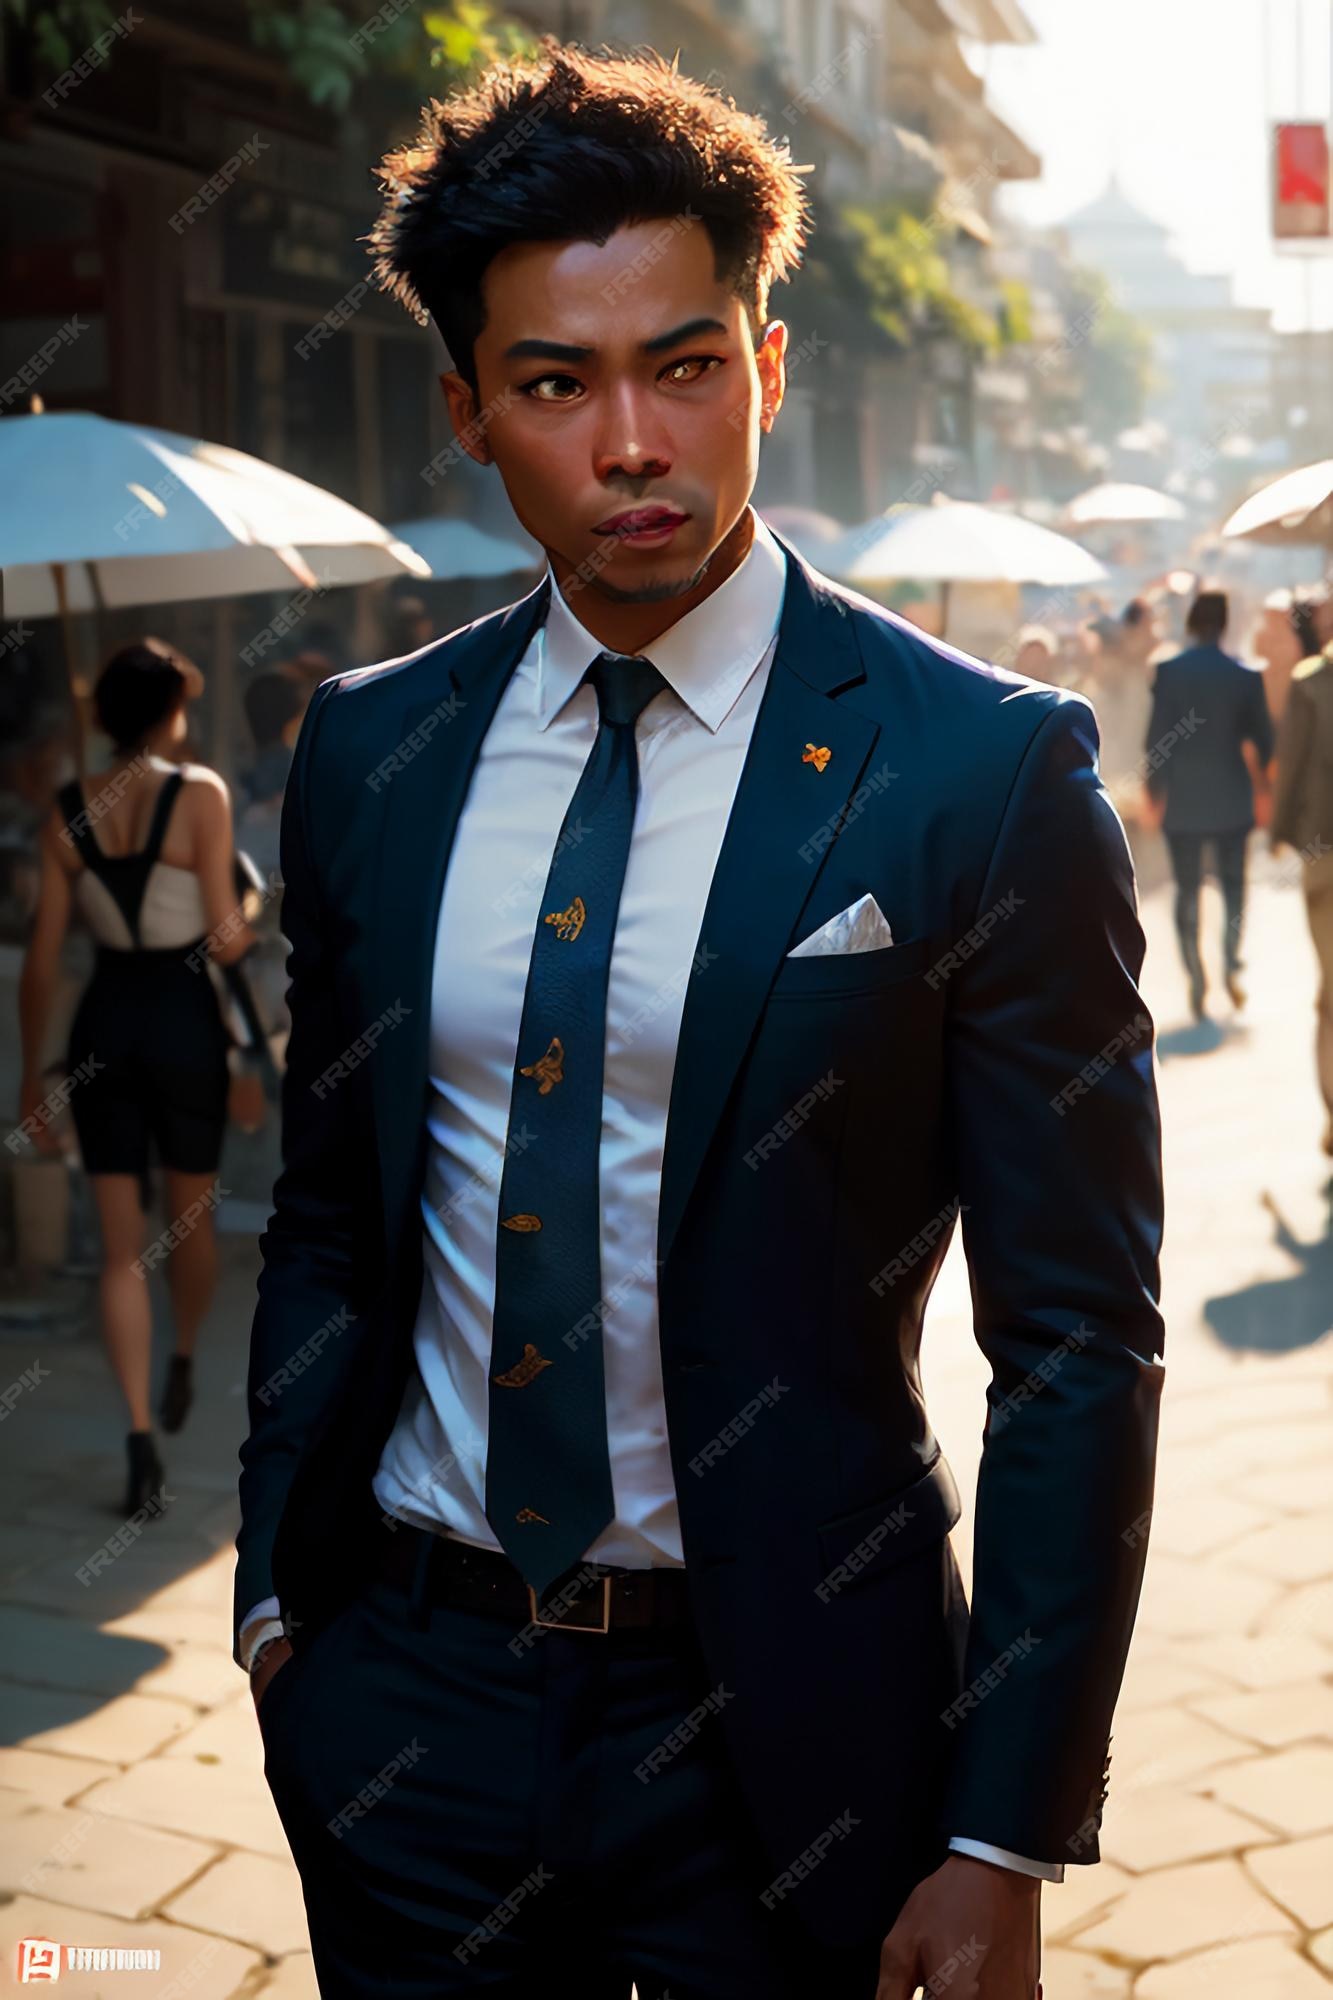 Un hombre con traje y corbata con un de bolsillo. | Foto Premium